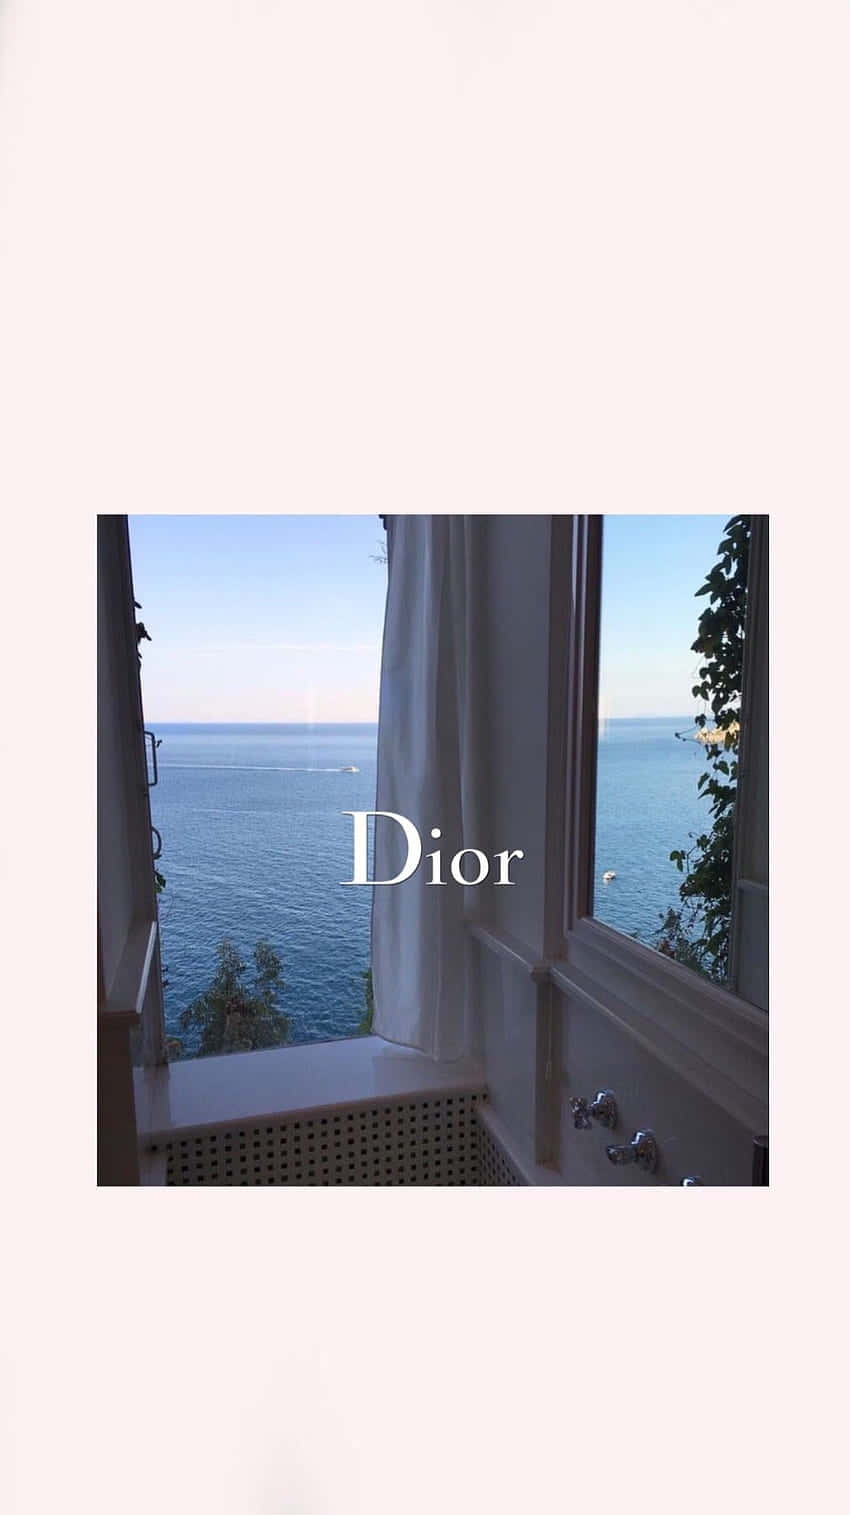 Dior Branded Seaside View Wallpaper